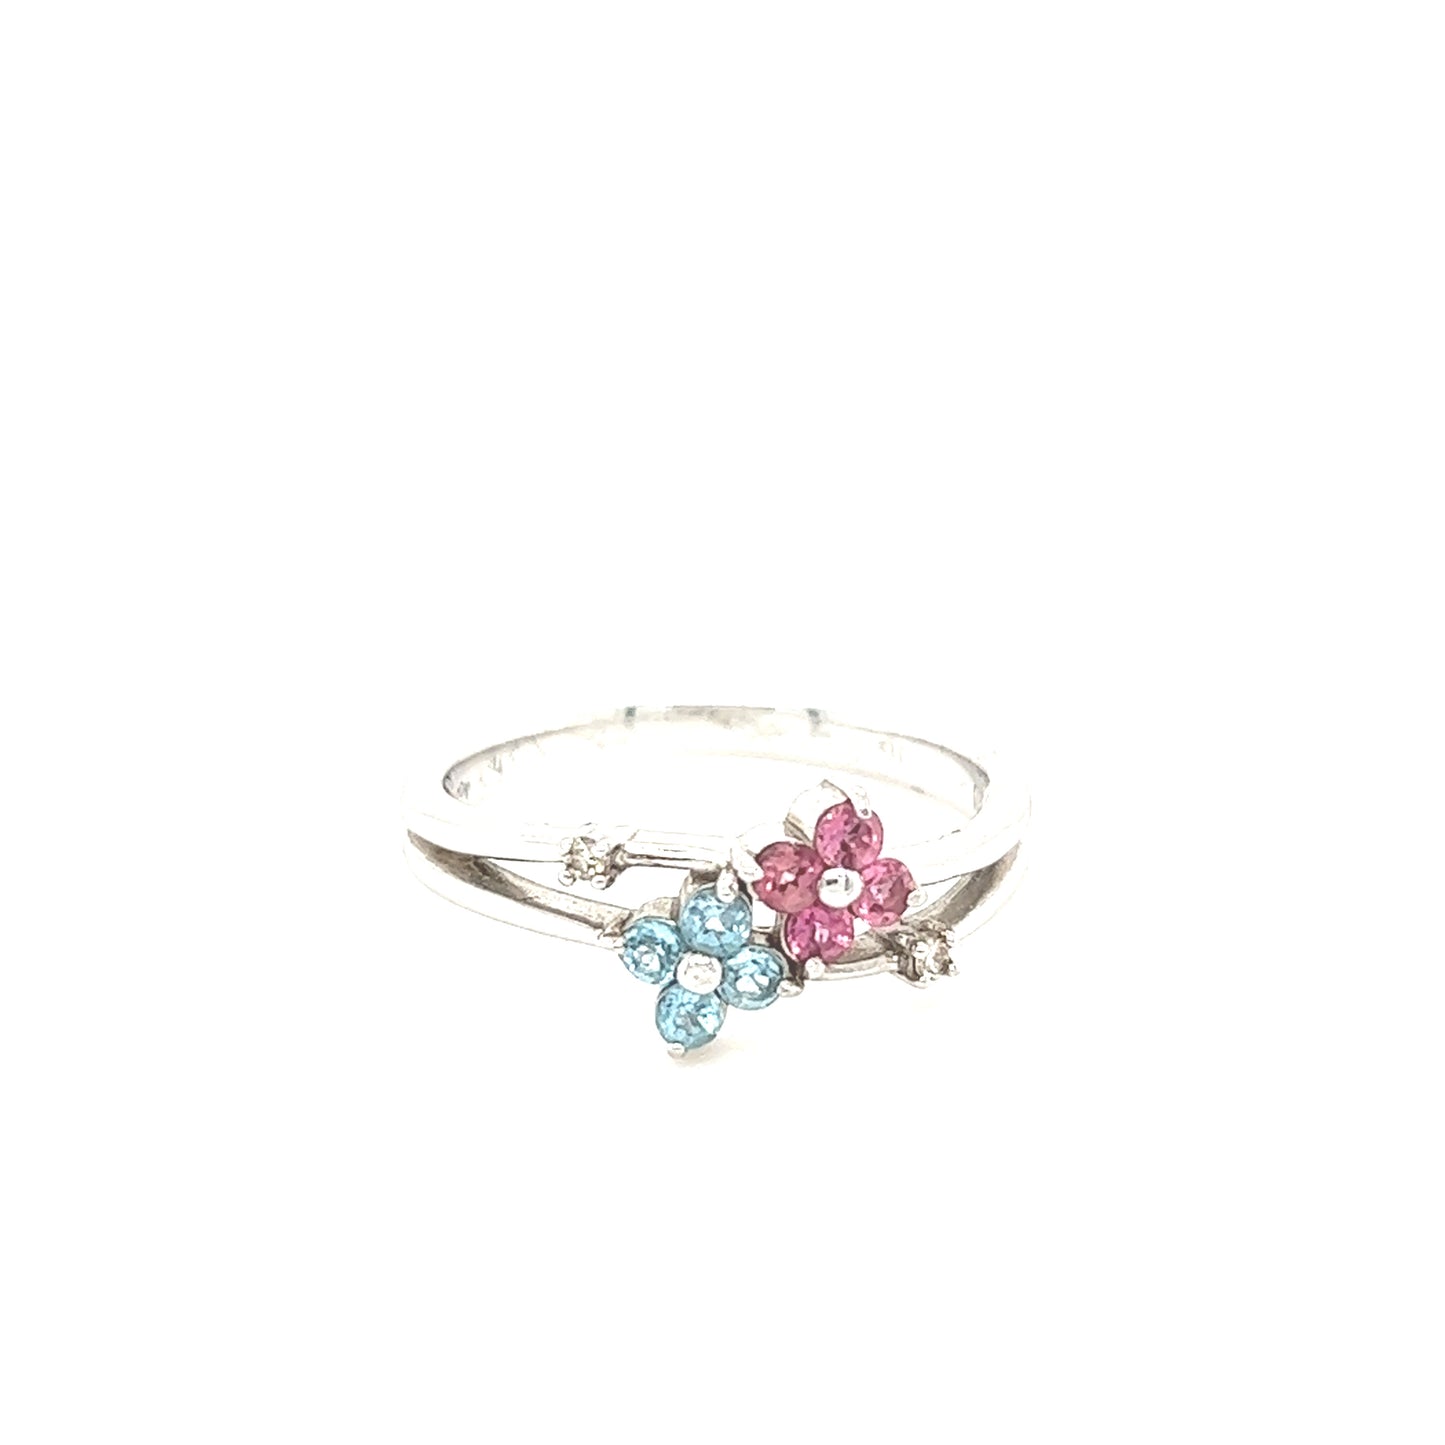 10K Vivid pink and blue diamond ring